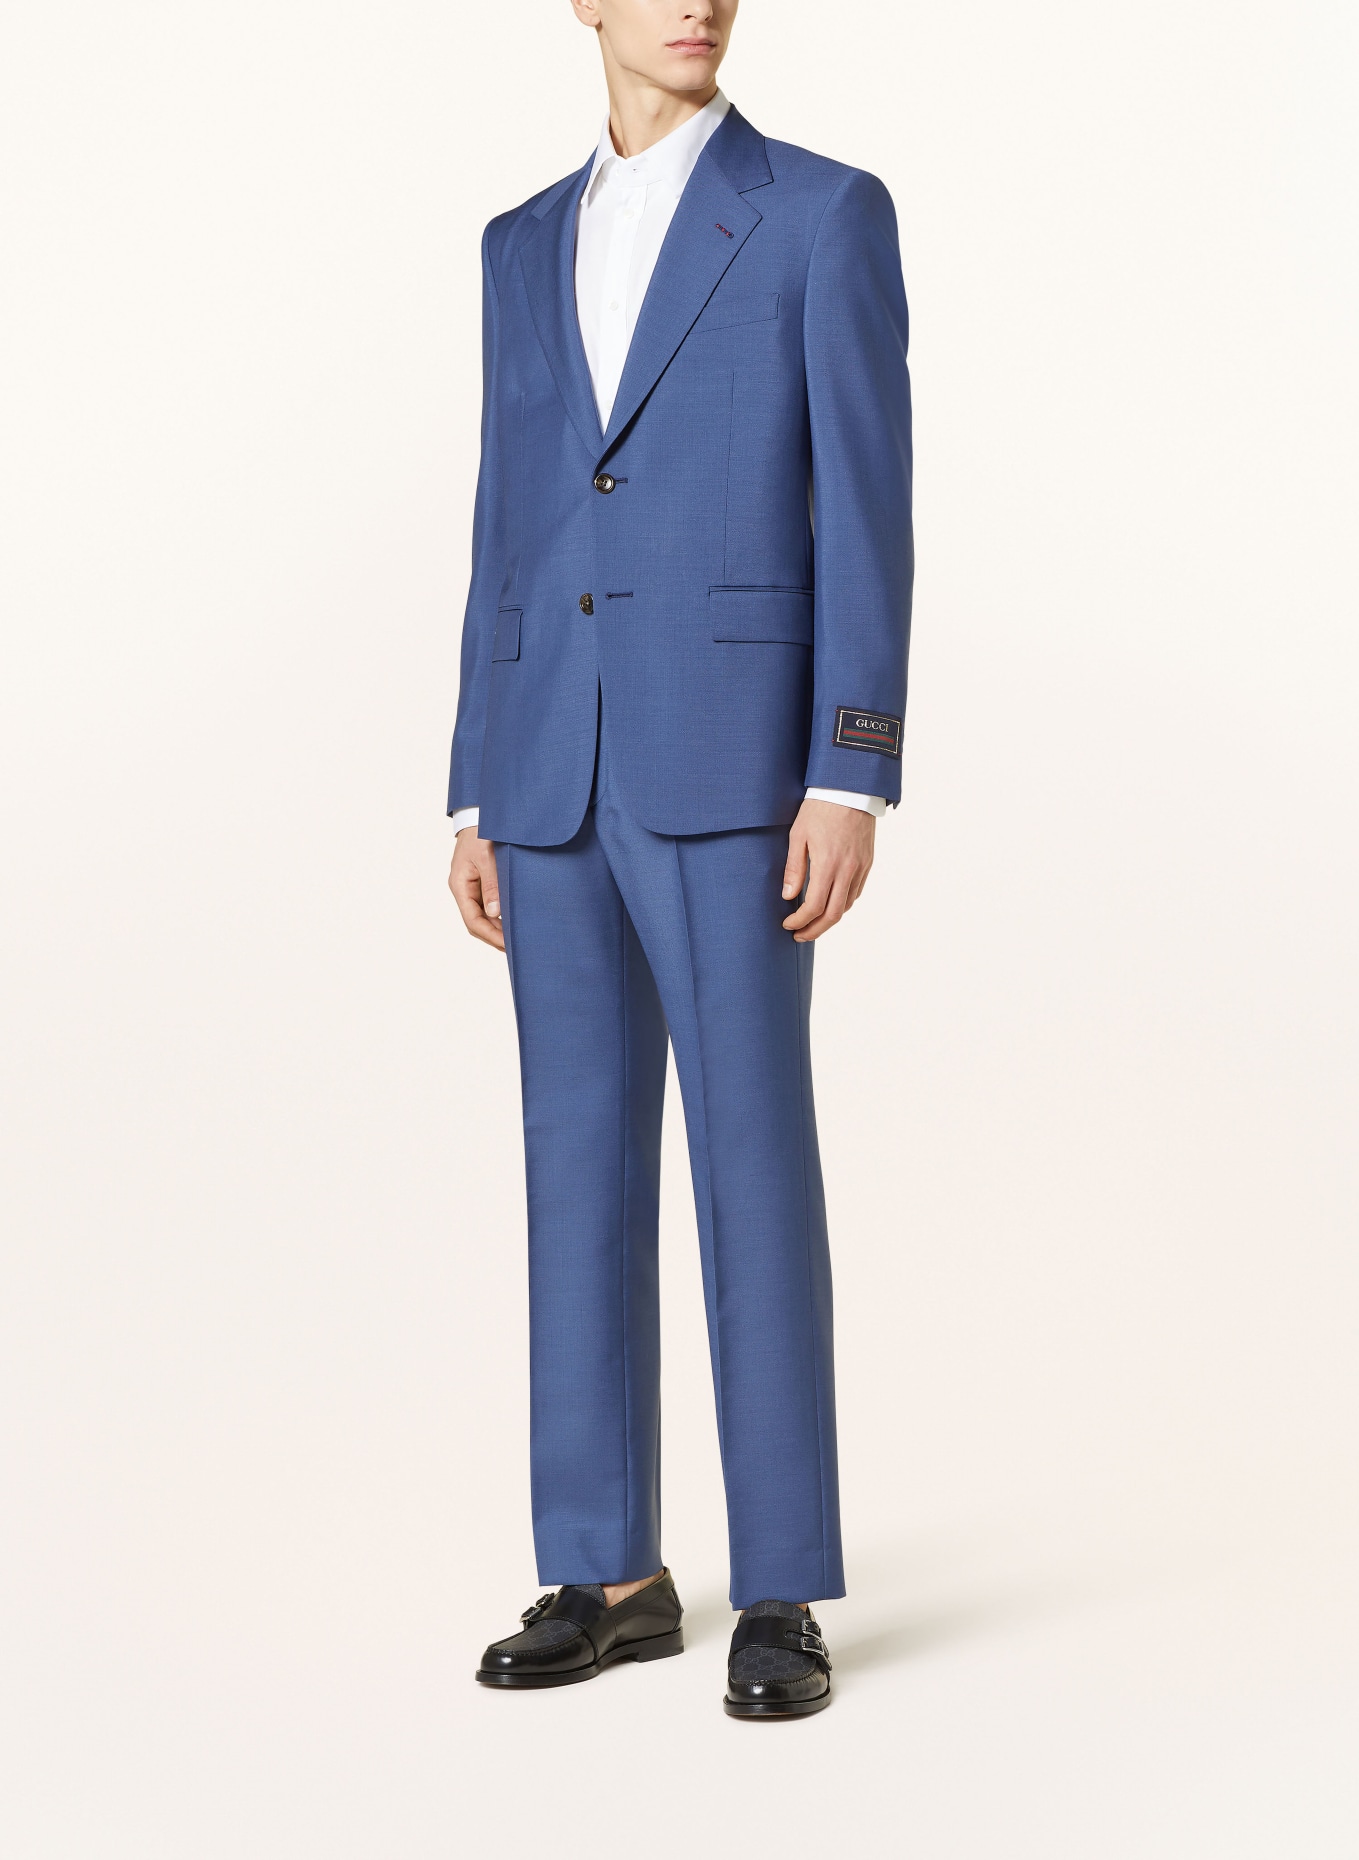 GUCCI Anzughose Slim Fit mit Mohair, Farbe: 4719 STORMY SEA (LIGHT BLUE) (Bild 2)